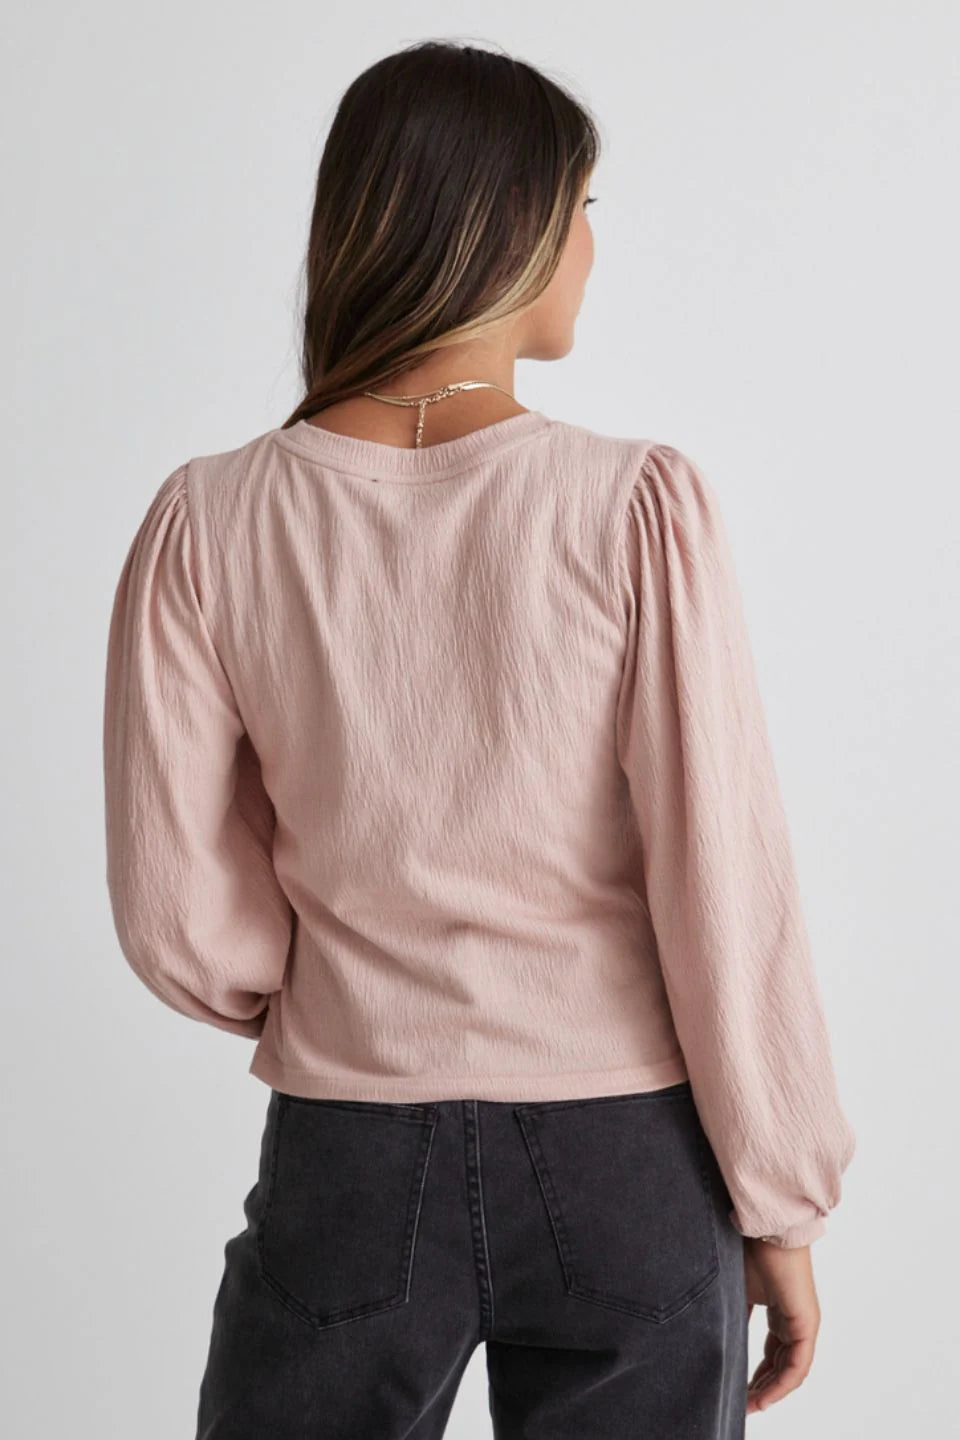 AnnaBelle Blush Puff Long Sleeve Soft Textured Knit Top